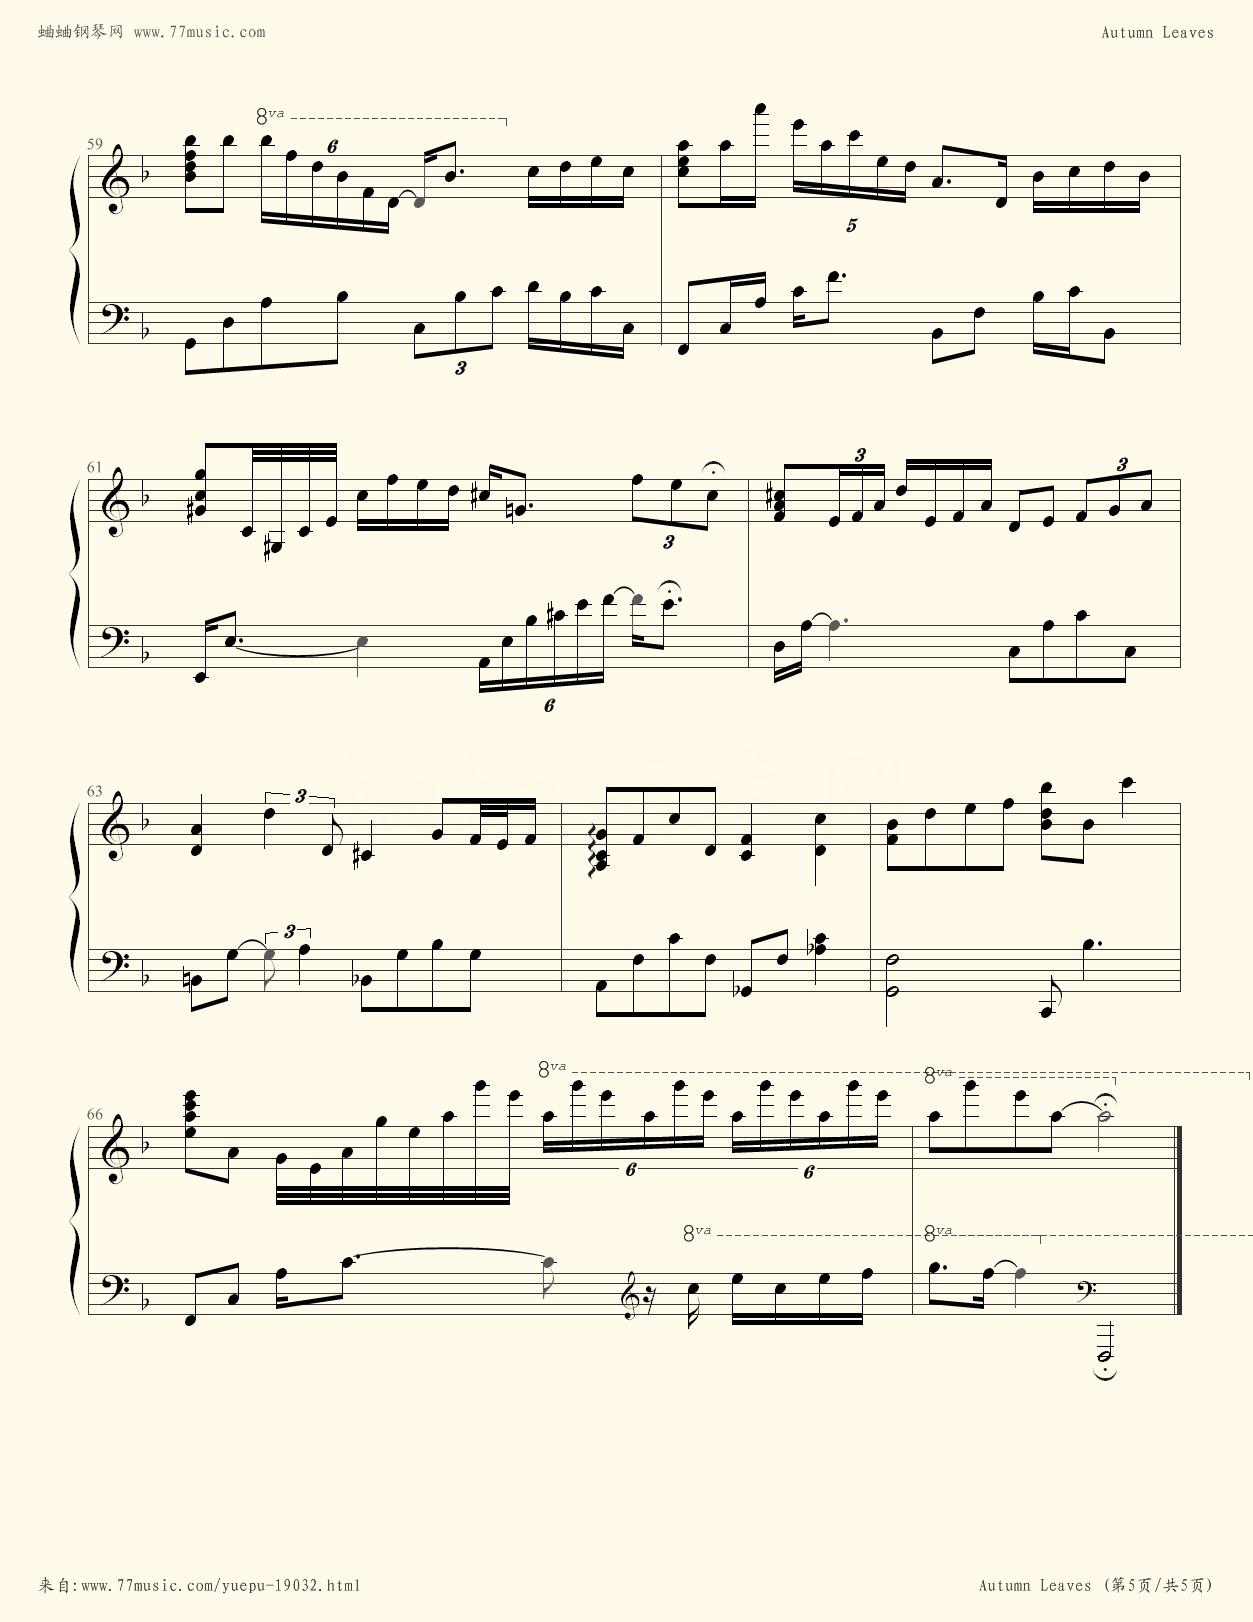 Autumn Leaves - Yiruma - Flash Piano Sheet Music Free